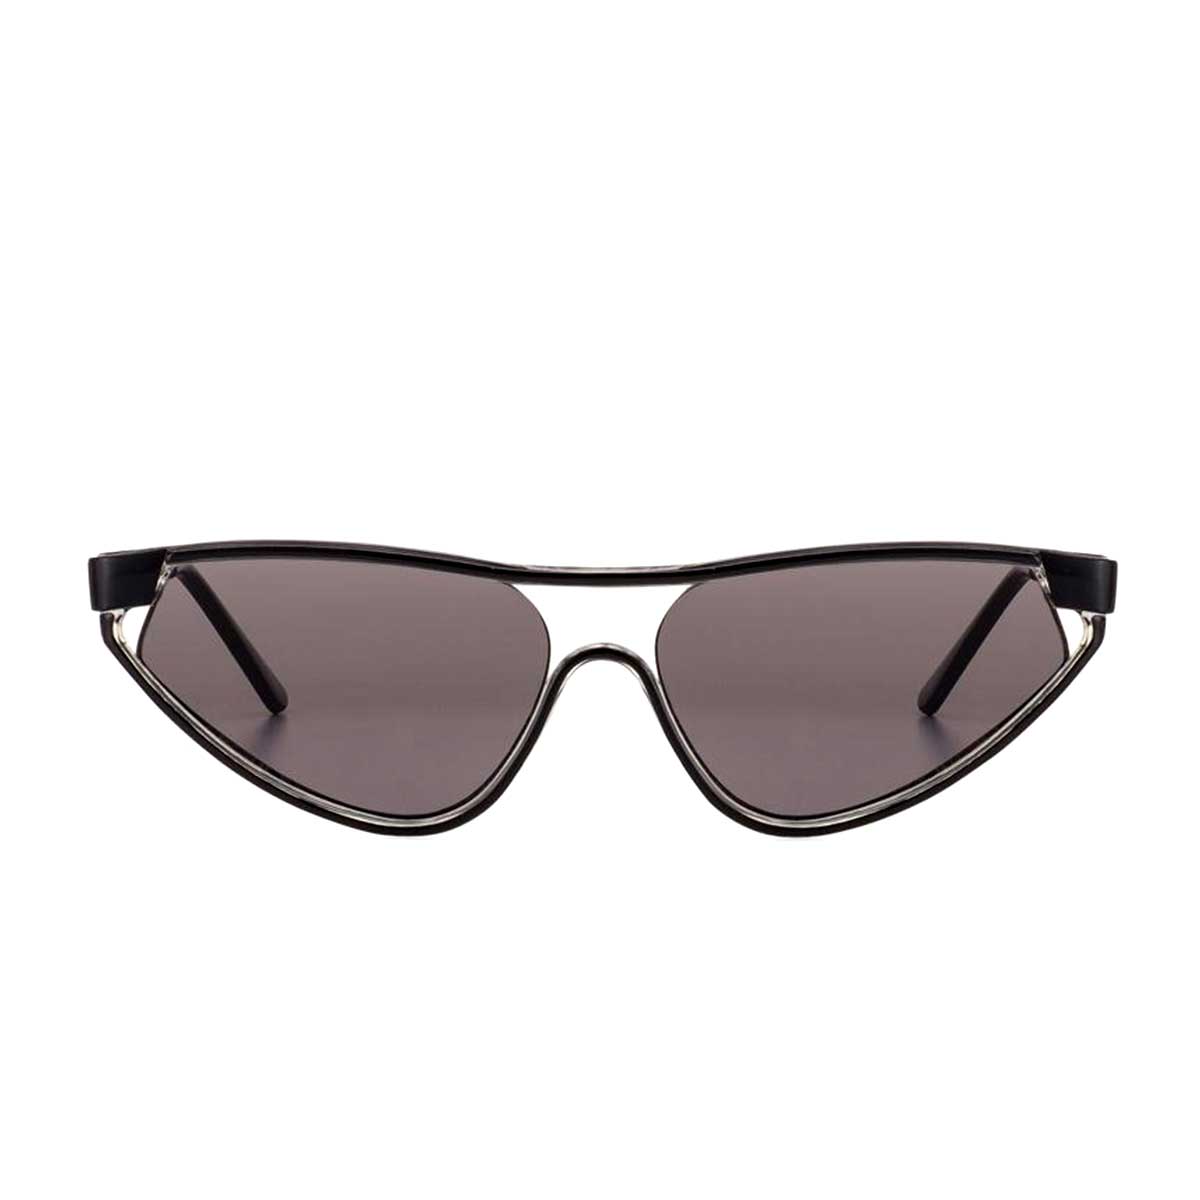 Spitfire Snap Sunglasses Black